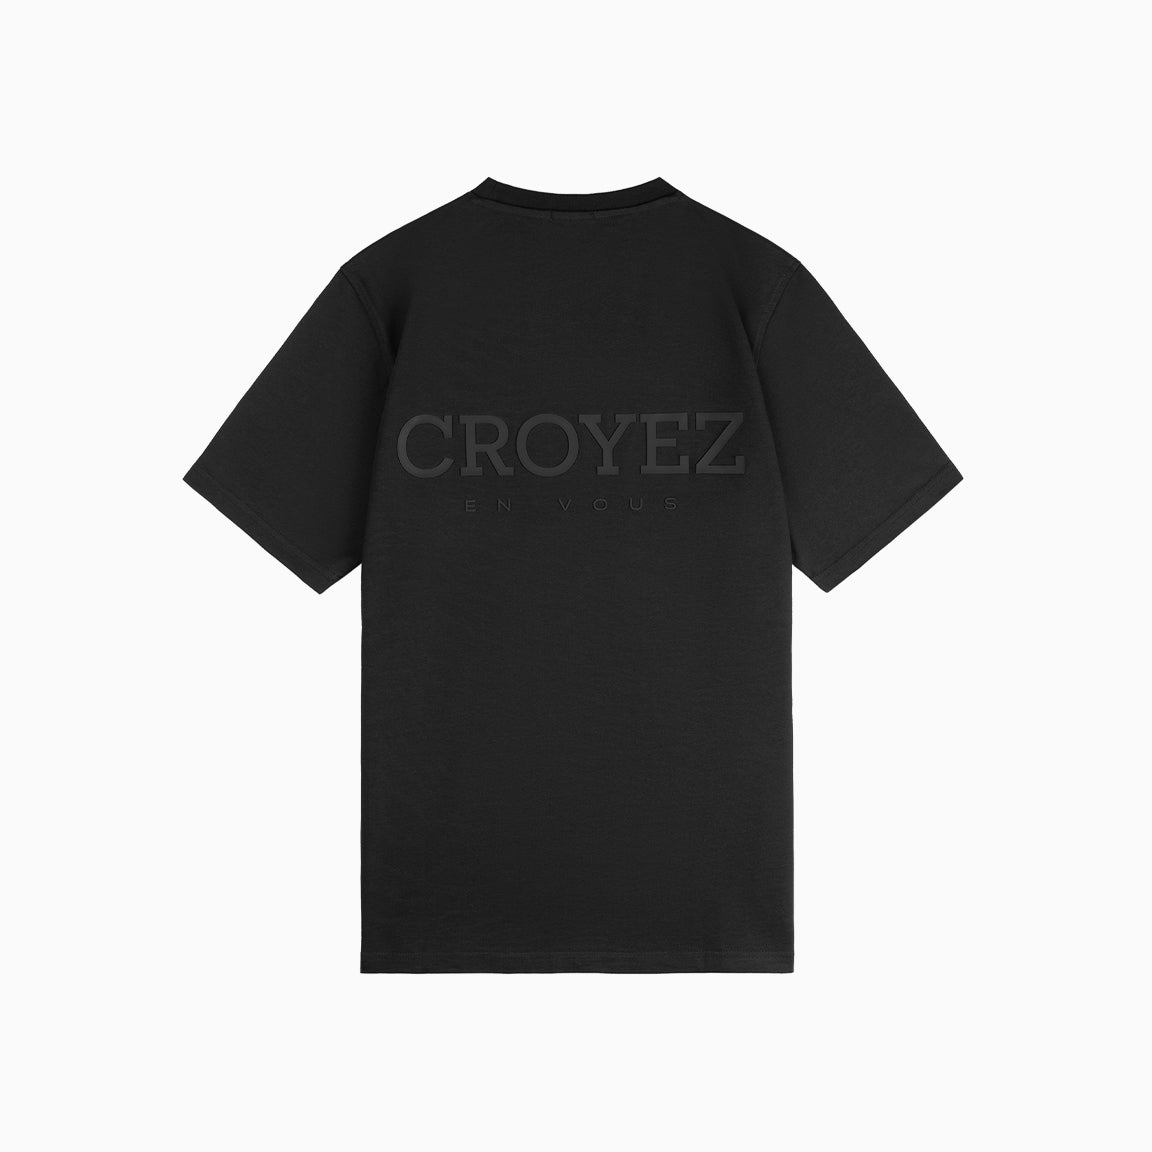 CROYEZ ABSTRACT T-SHIRT - BLACK